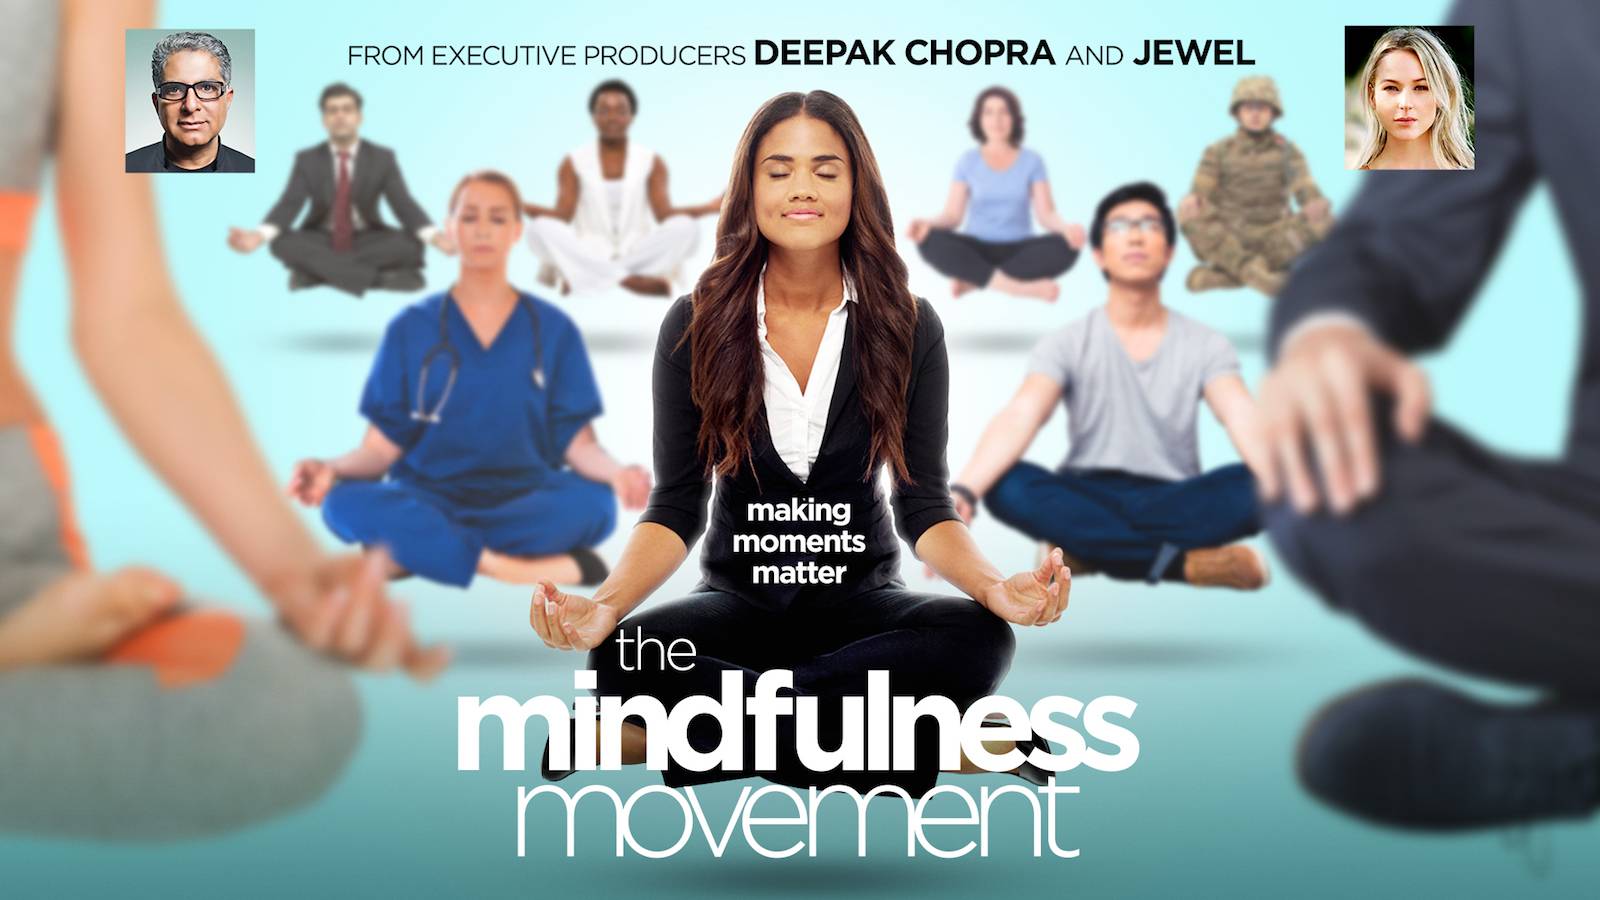 Deepak Chopra, Jewel and other people practicing mindfulness